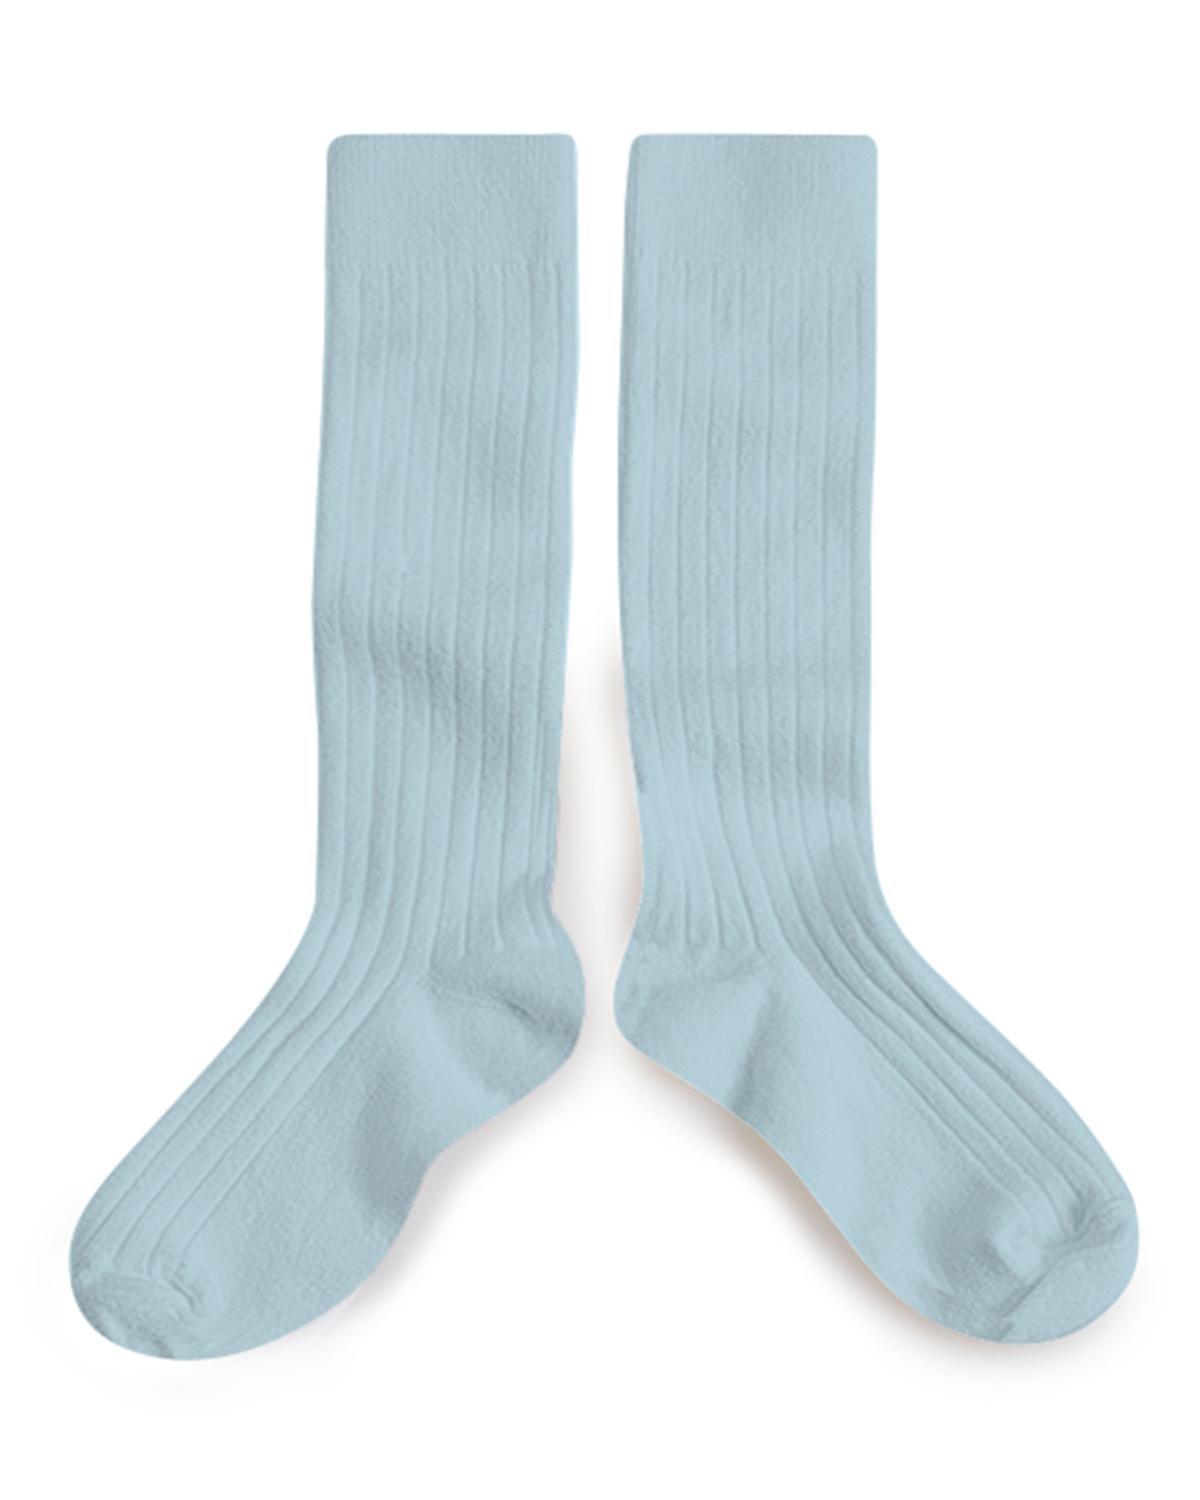 Little collegien accessories 18/20 ribbed knee high socks in bleu de pastel